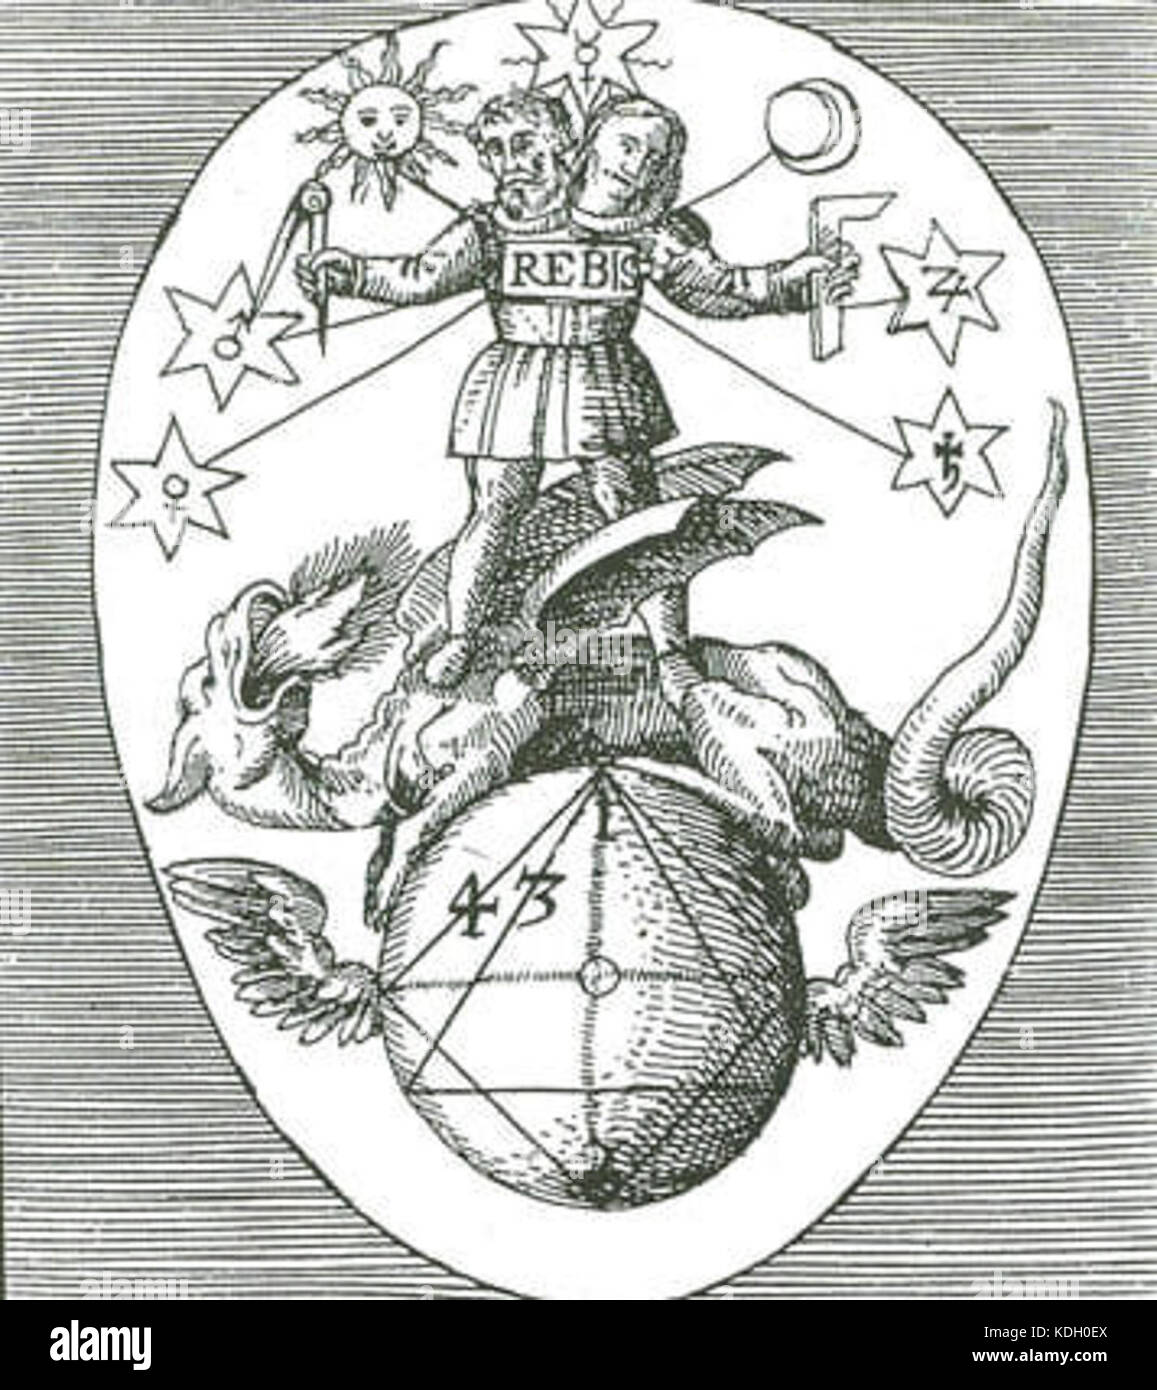 Rebis Theoria Philosophiae Hermeticae 1617 Stock Photo